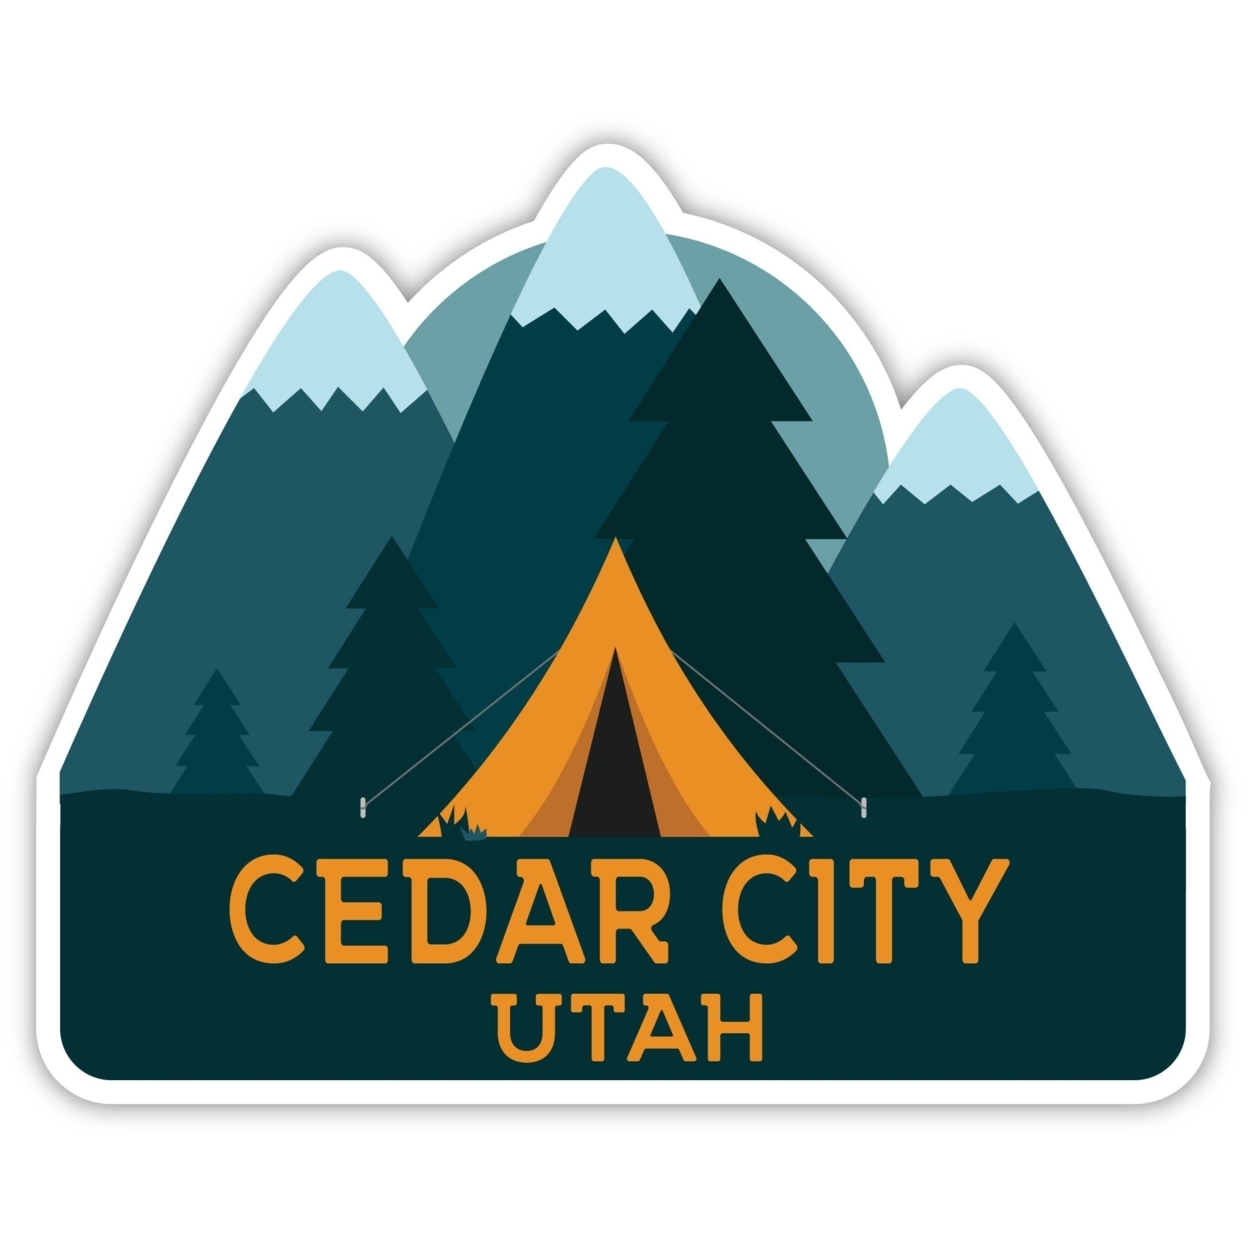 Cedar City Utah Souvenir Decorative Stickers (Choose Theme And Size) - Single Unit, 12-Inch, Adventures Awaits